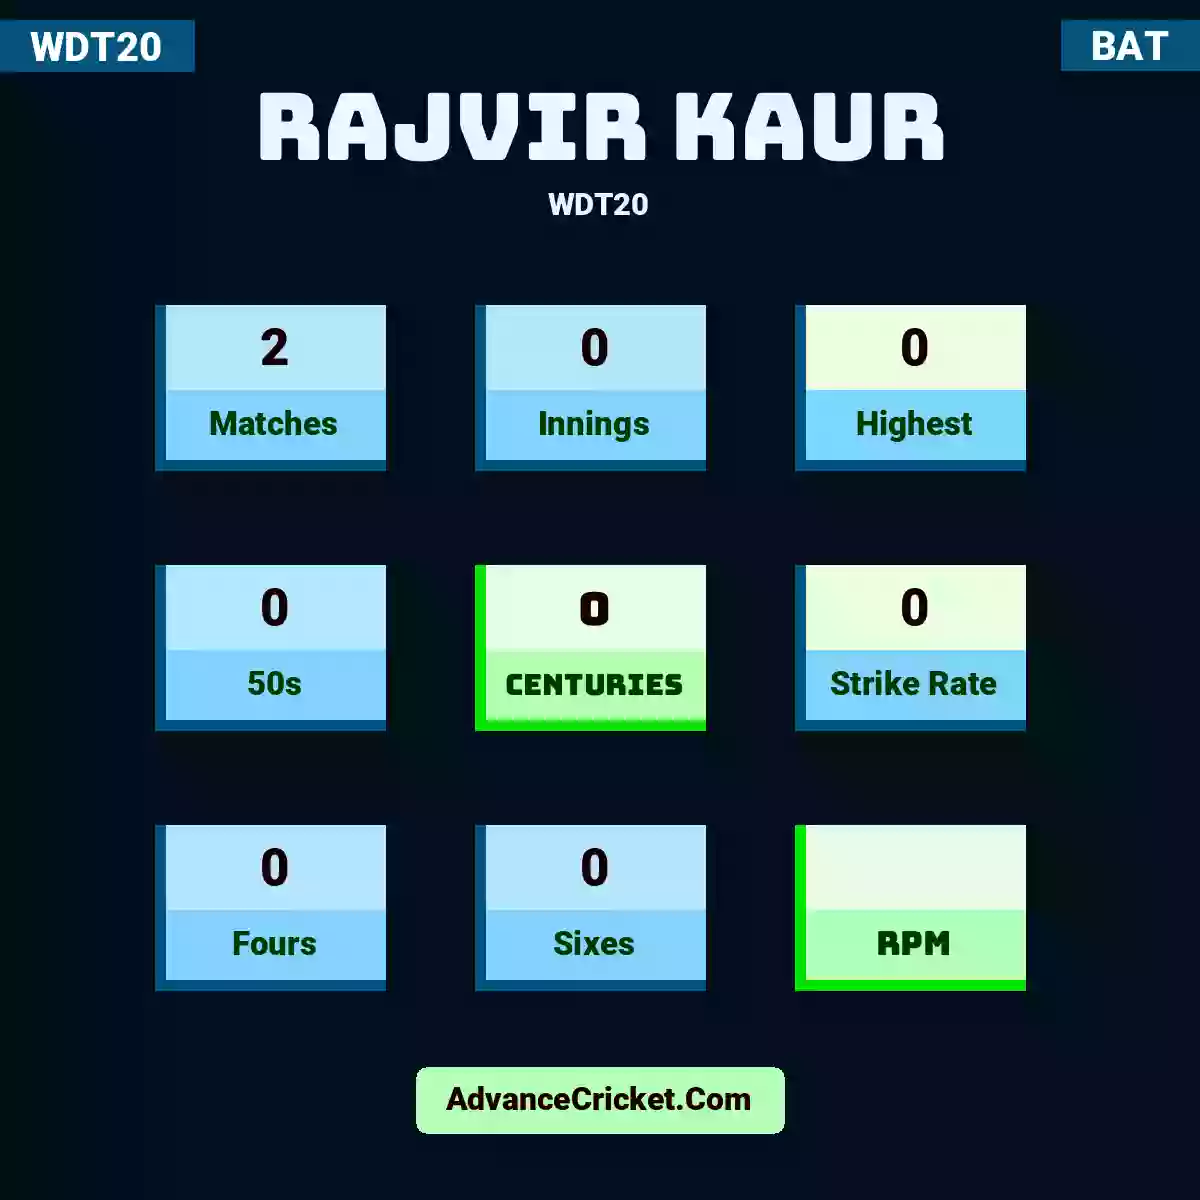 Rajvir Kaur WDT20 , Rajvir Kaur played 2 matches, scored 0 runs as highest, 0 half-centuries, and 0 centuries, with a strike rate of 0. R.Kaur hit 0 fours and 0 sixes.